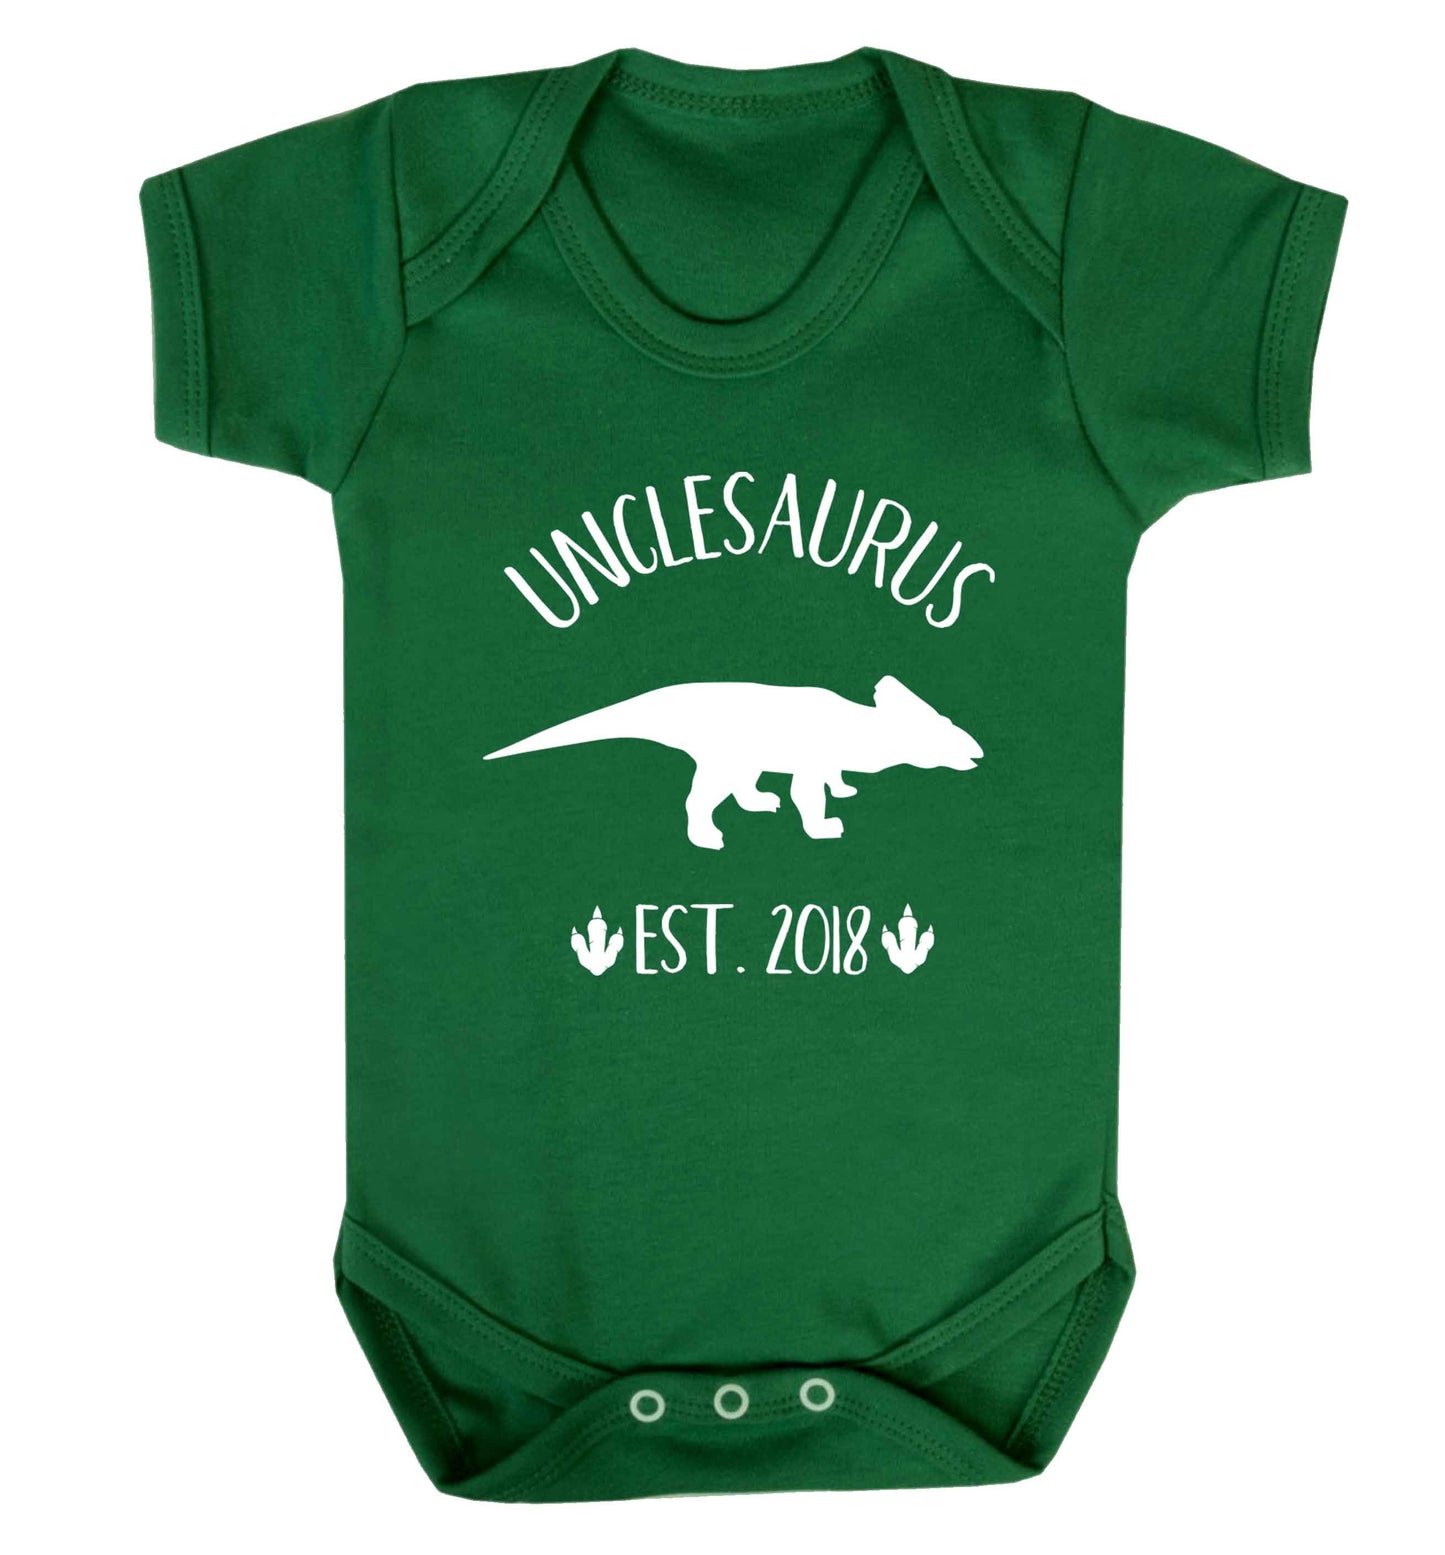 Personalised unclesaurus since (custom date) Baby Vest green 18-24 months